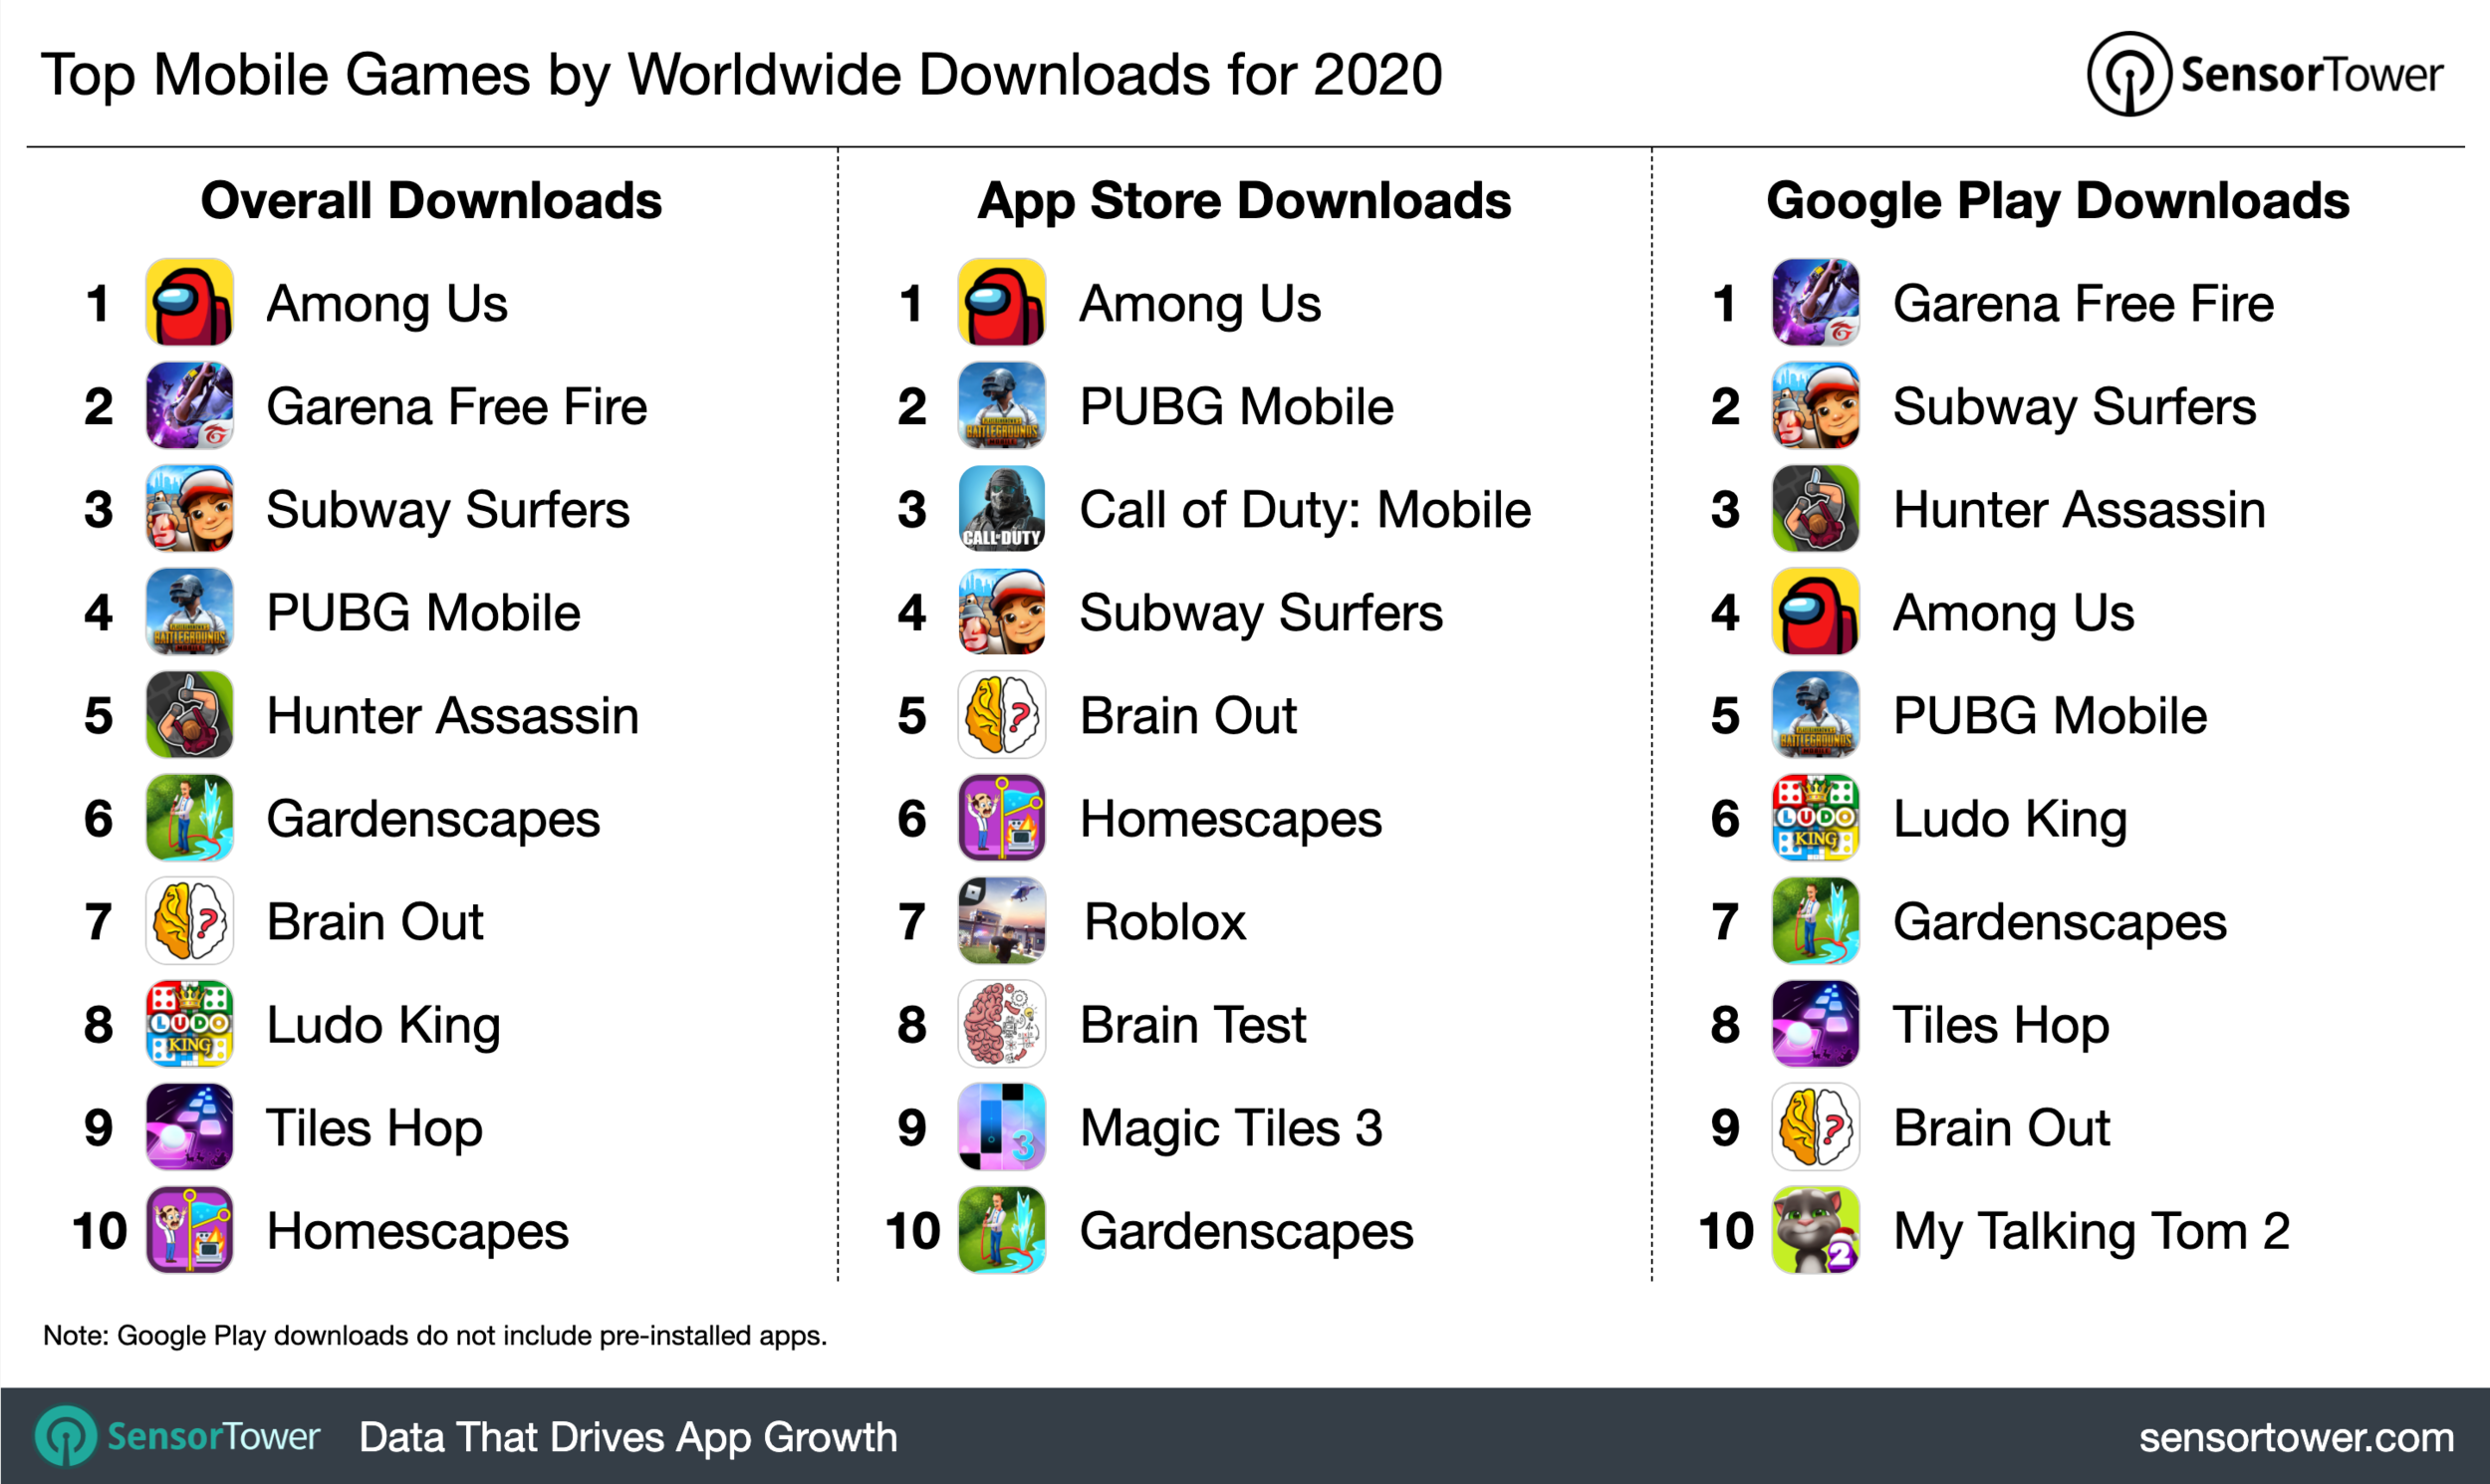 Worldwide Downloads for 2020